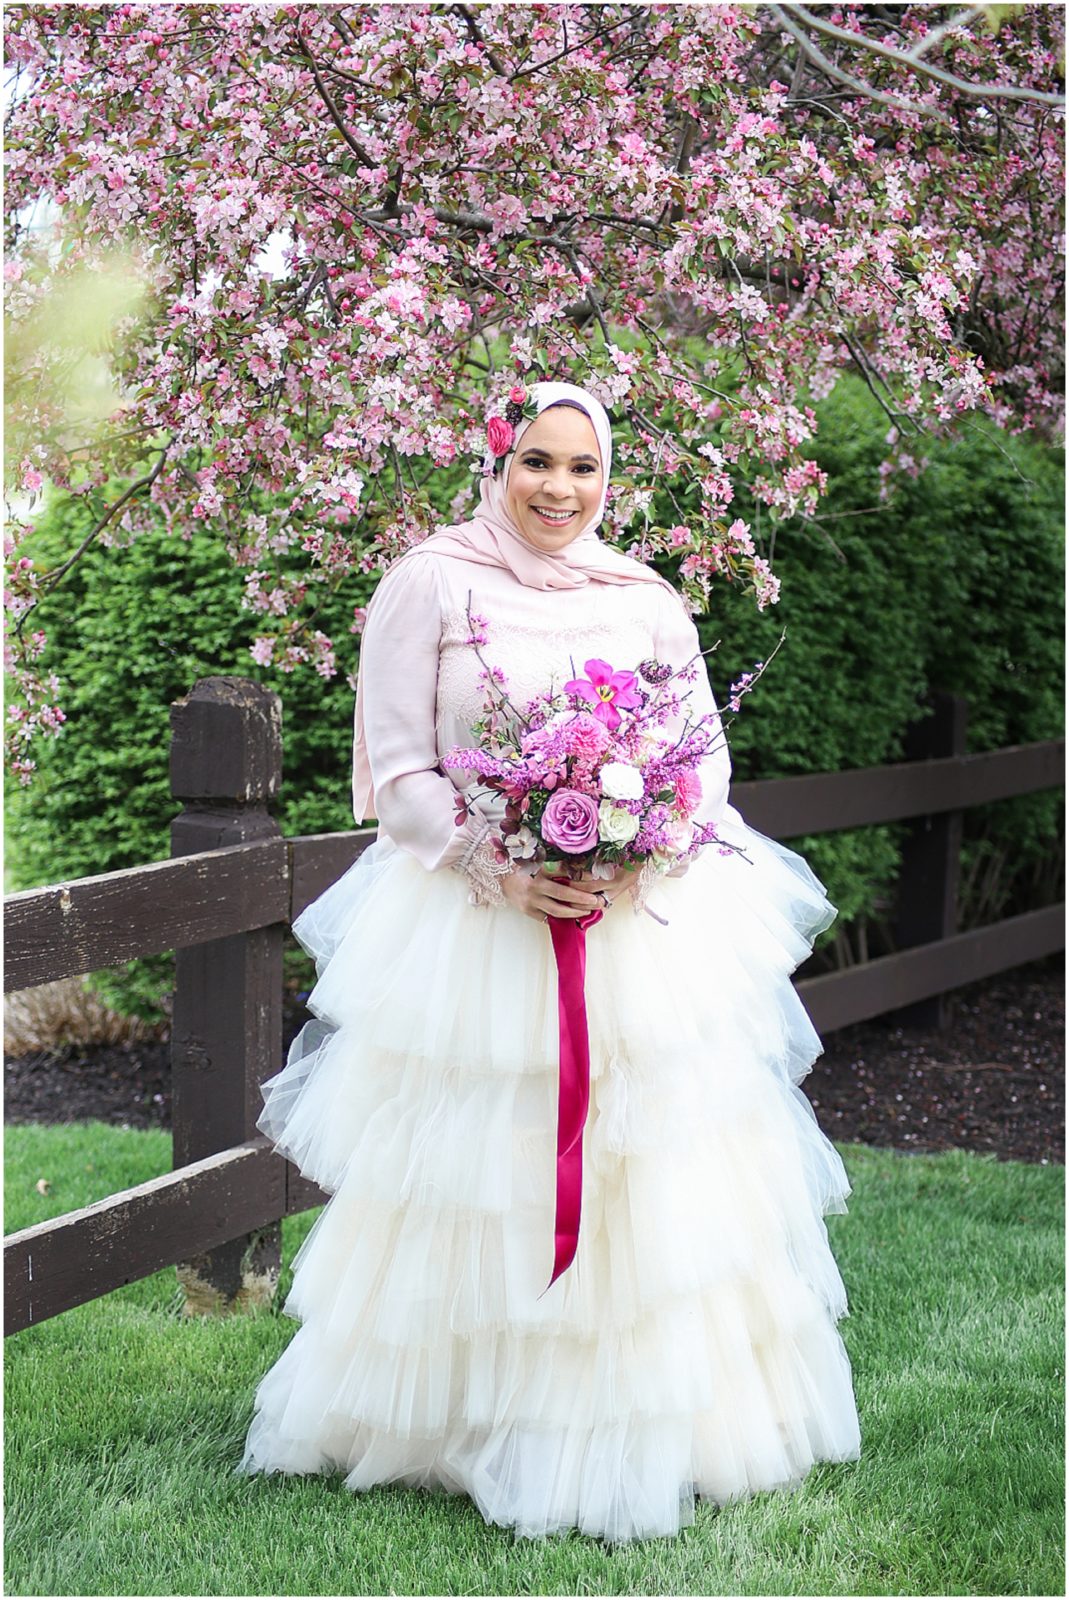 laughing bride and groom - wedding floral - lace wedding dress - hijabi - mariam saifan photography 